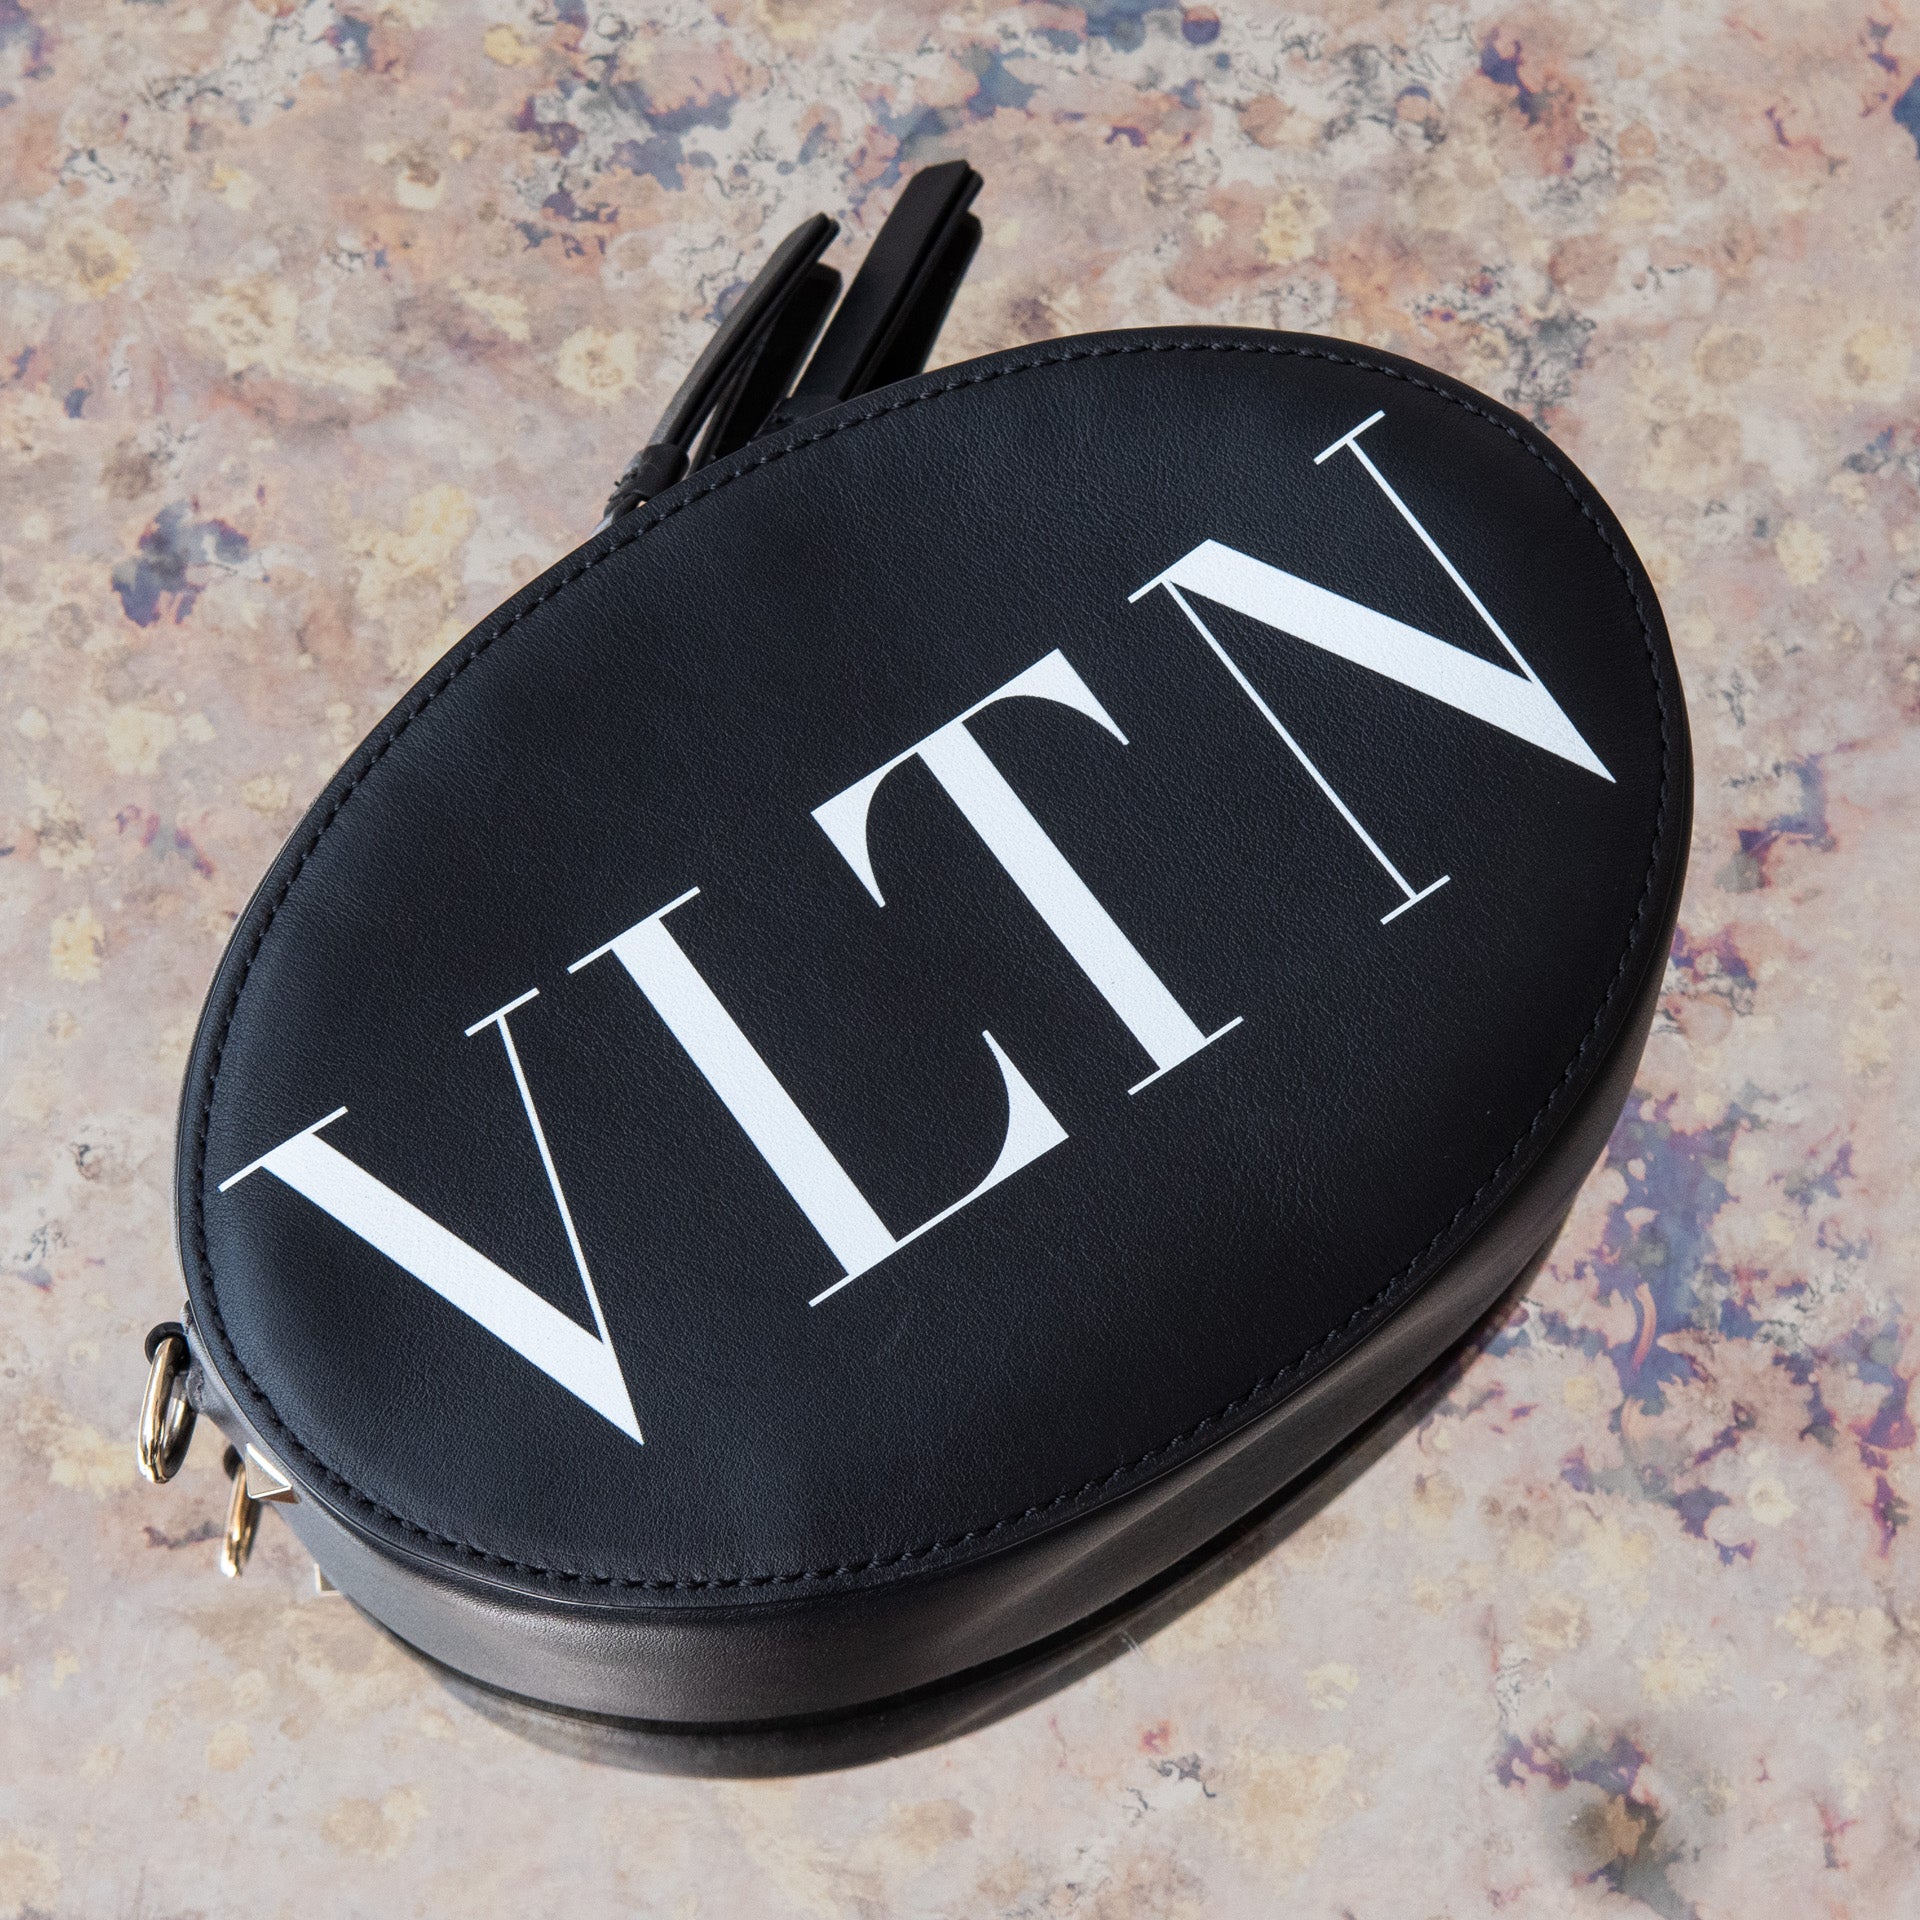 Valentino Garavani Rockstud Black Bag - Image 2 of 7